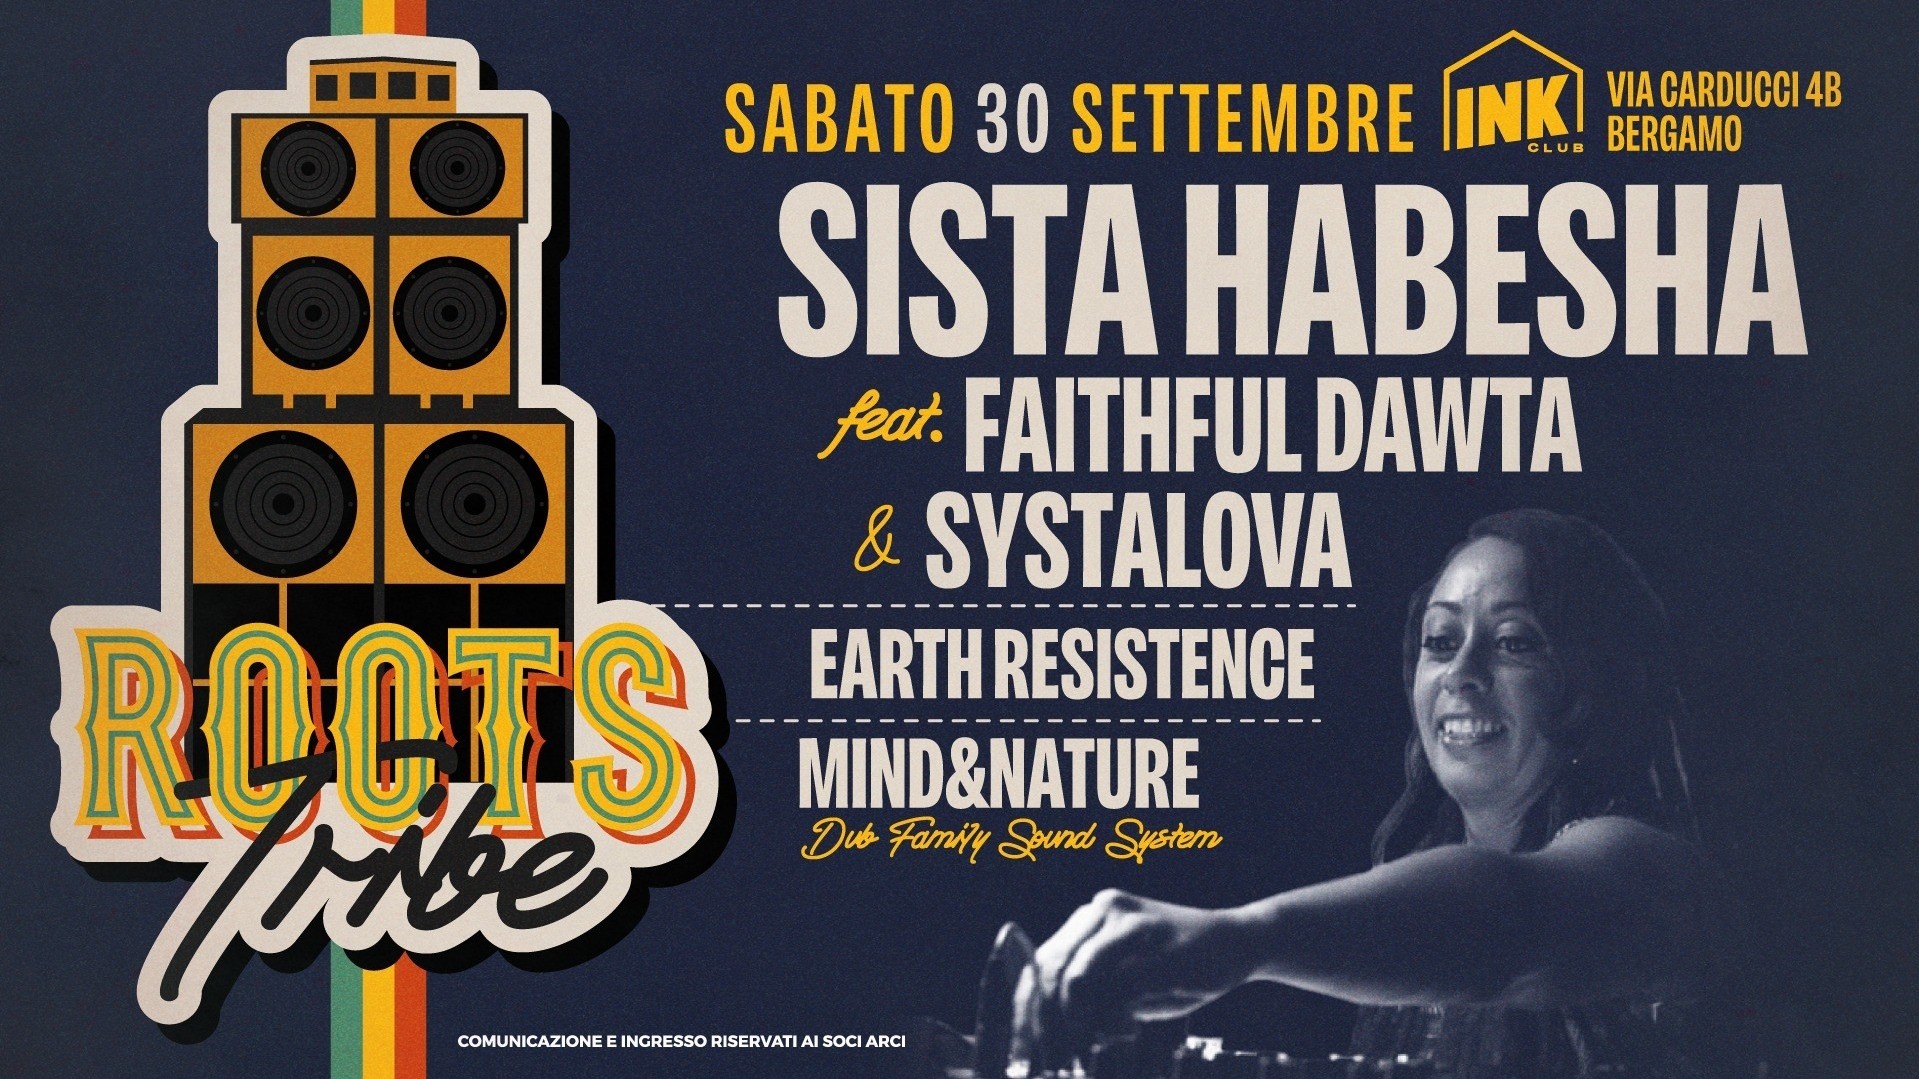 Roots Tribe - Sista Habesha + Faithful Dawta & Systalova - Earth Resistance - Mind&nature